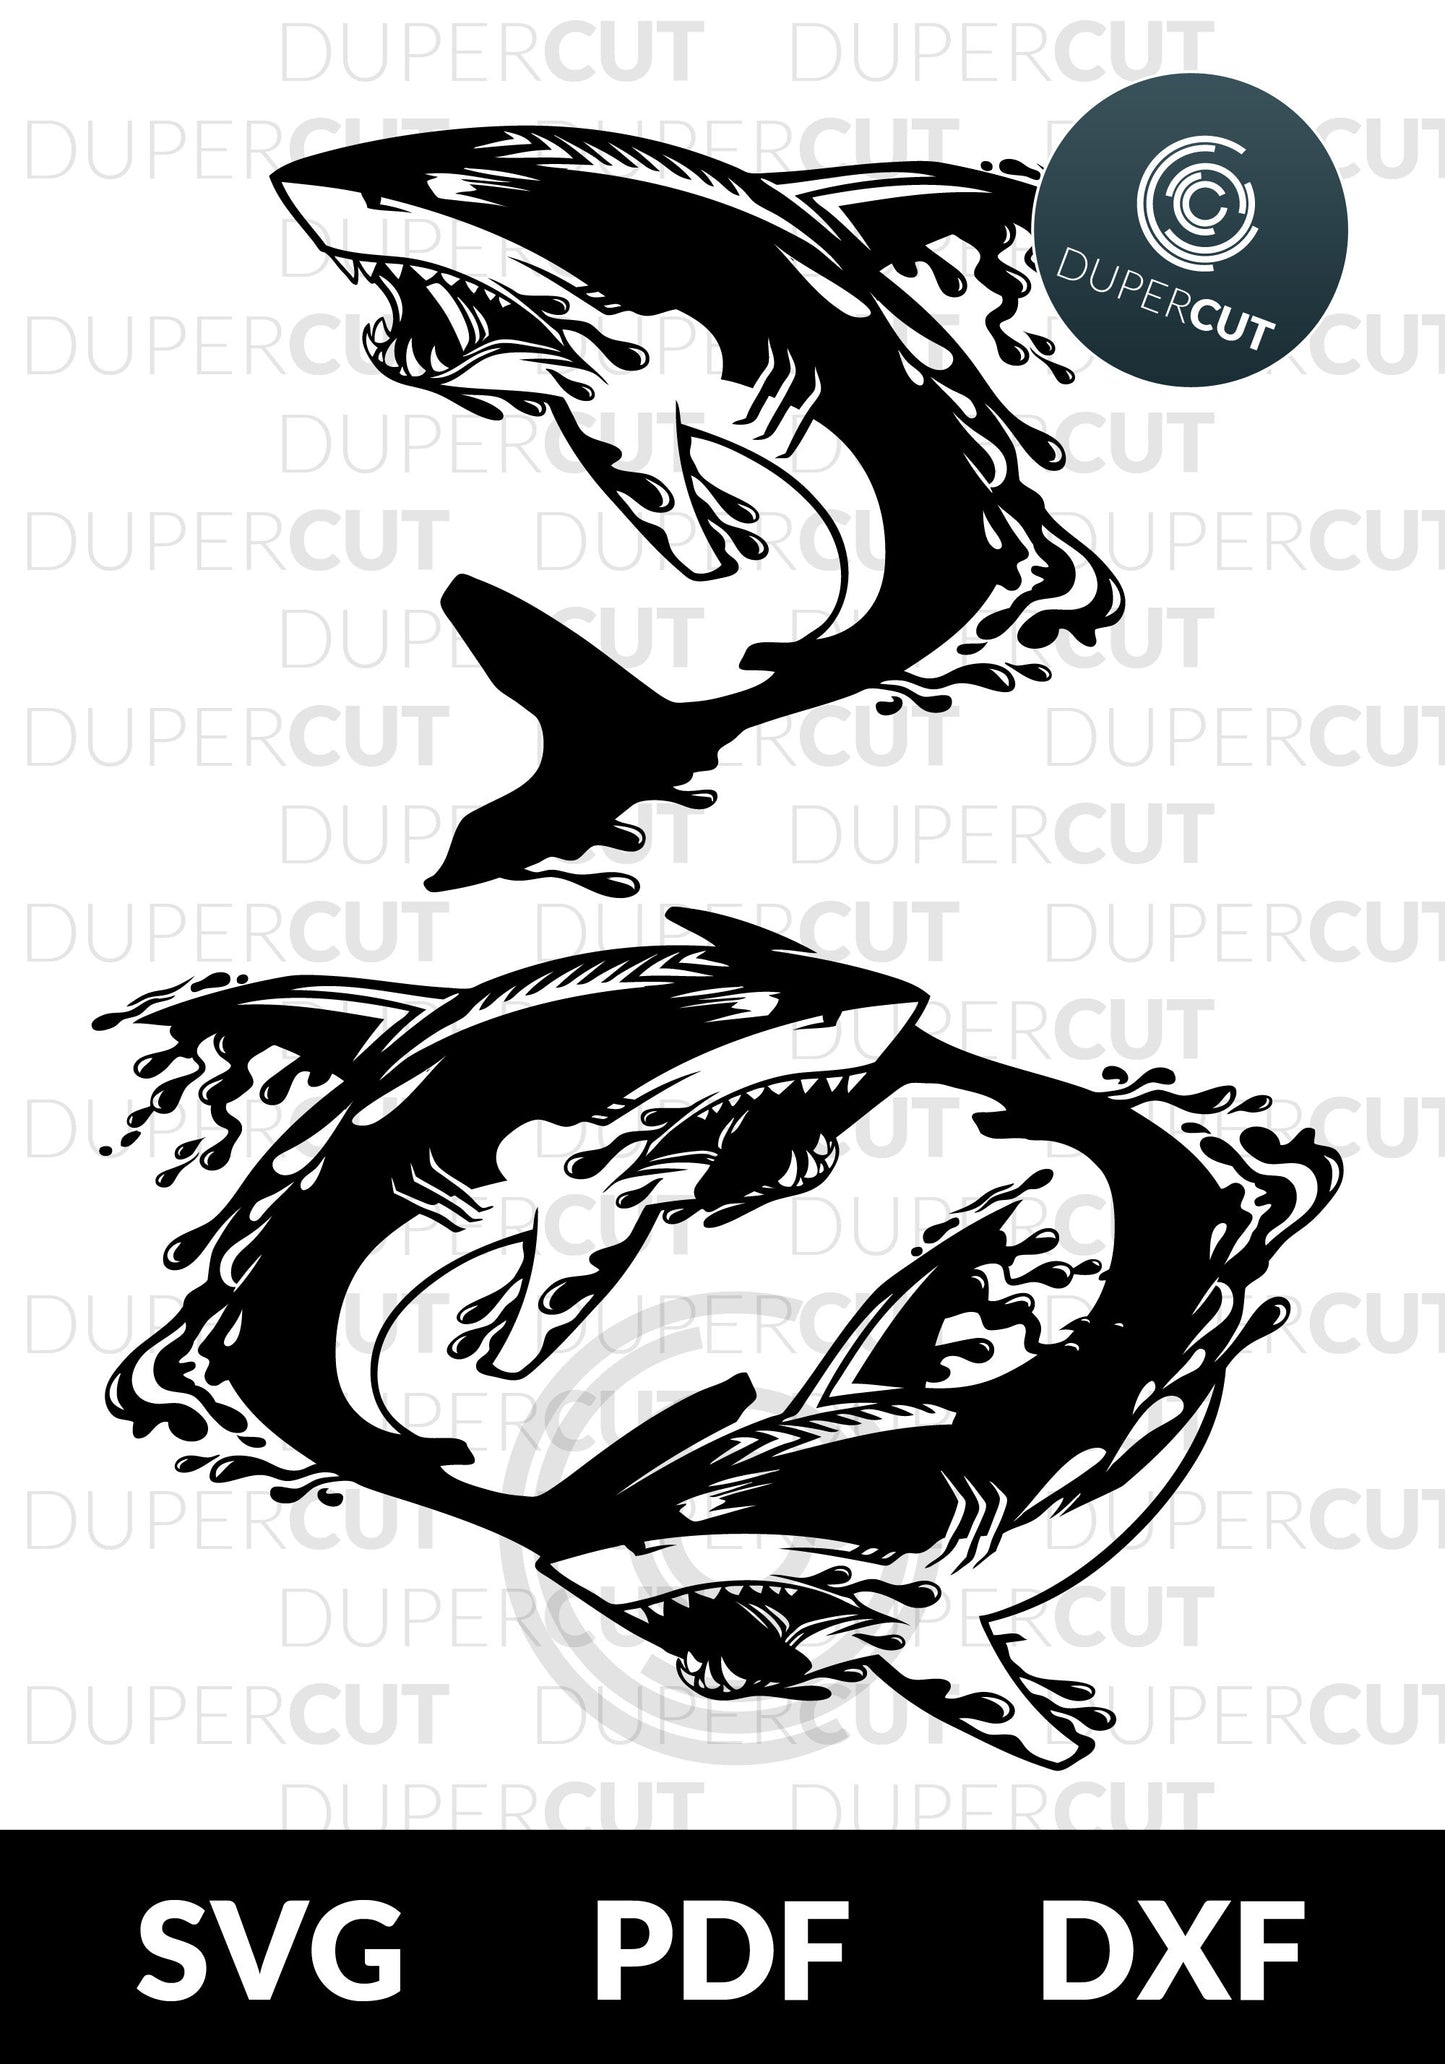 2 Designs - SWIMMING SHARKS - SVG / PDF / DXF